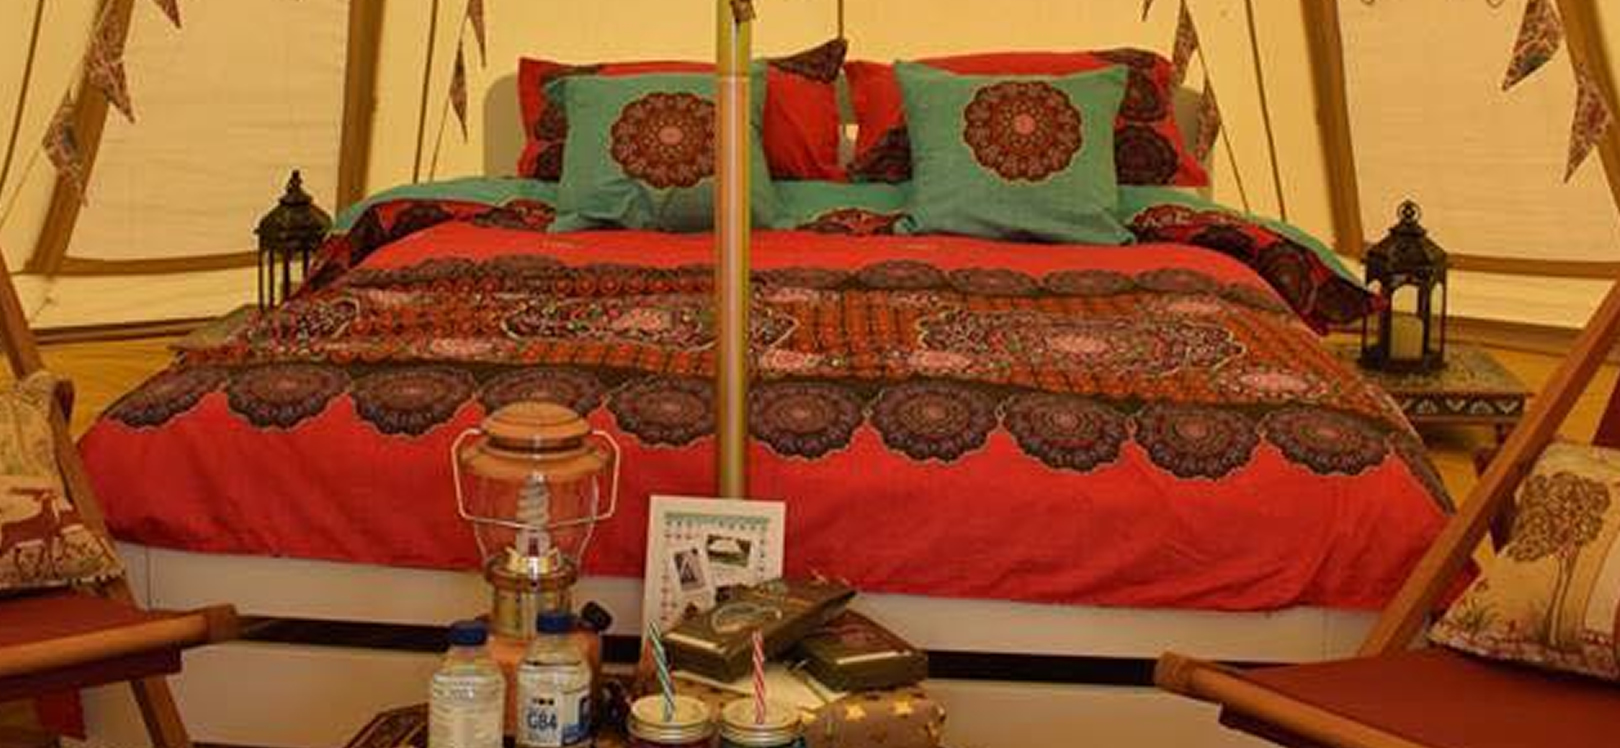 Bed inside a tepee